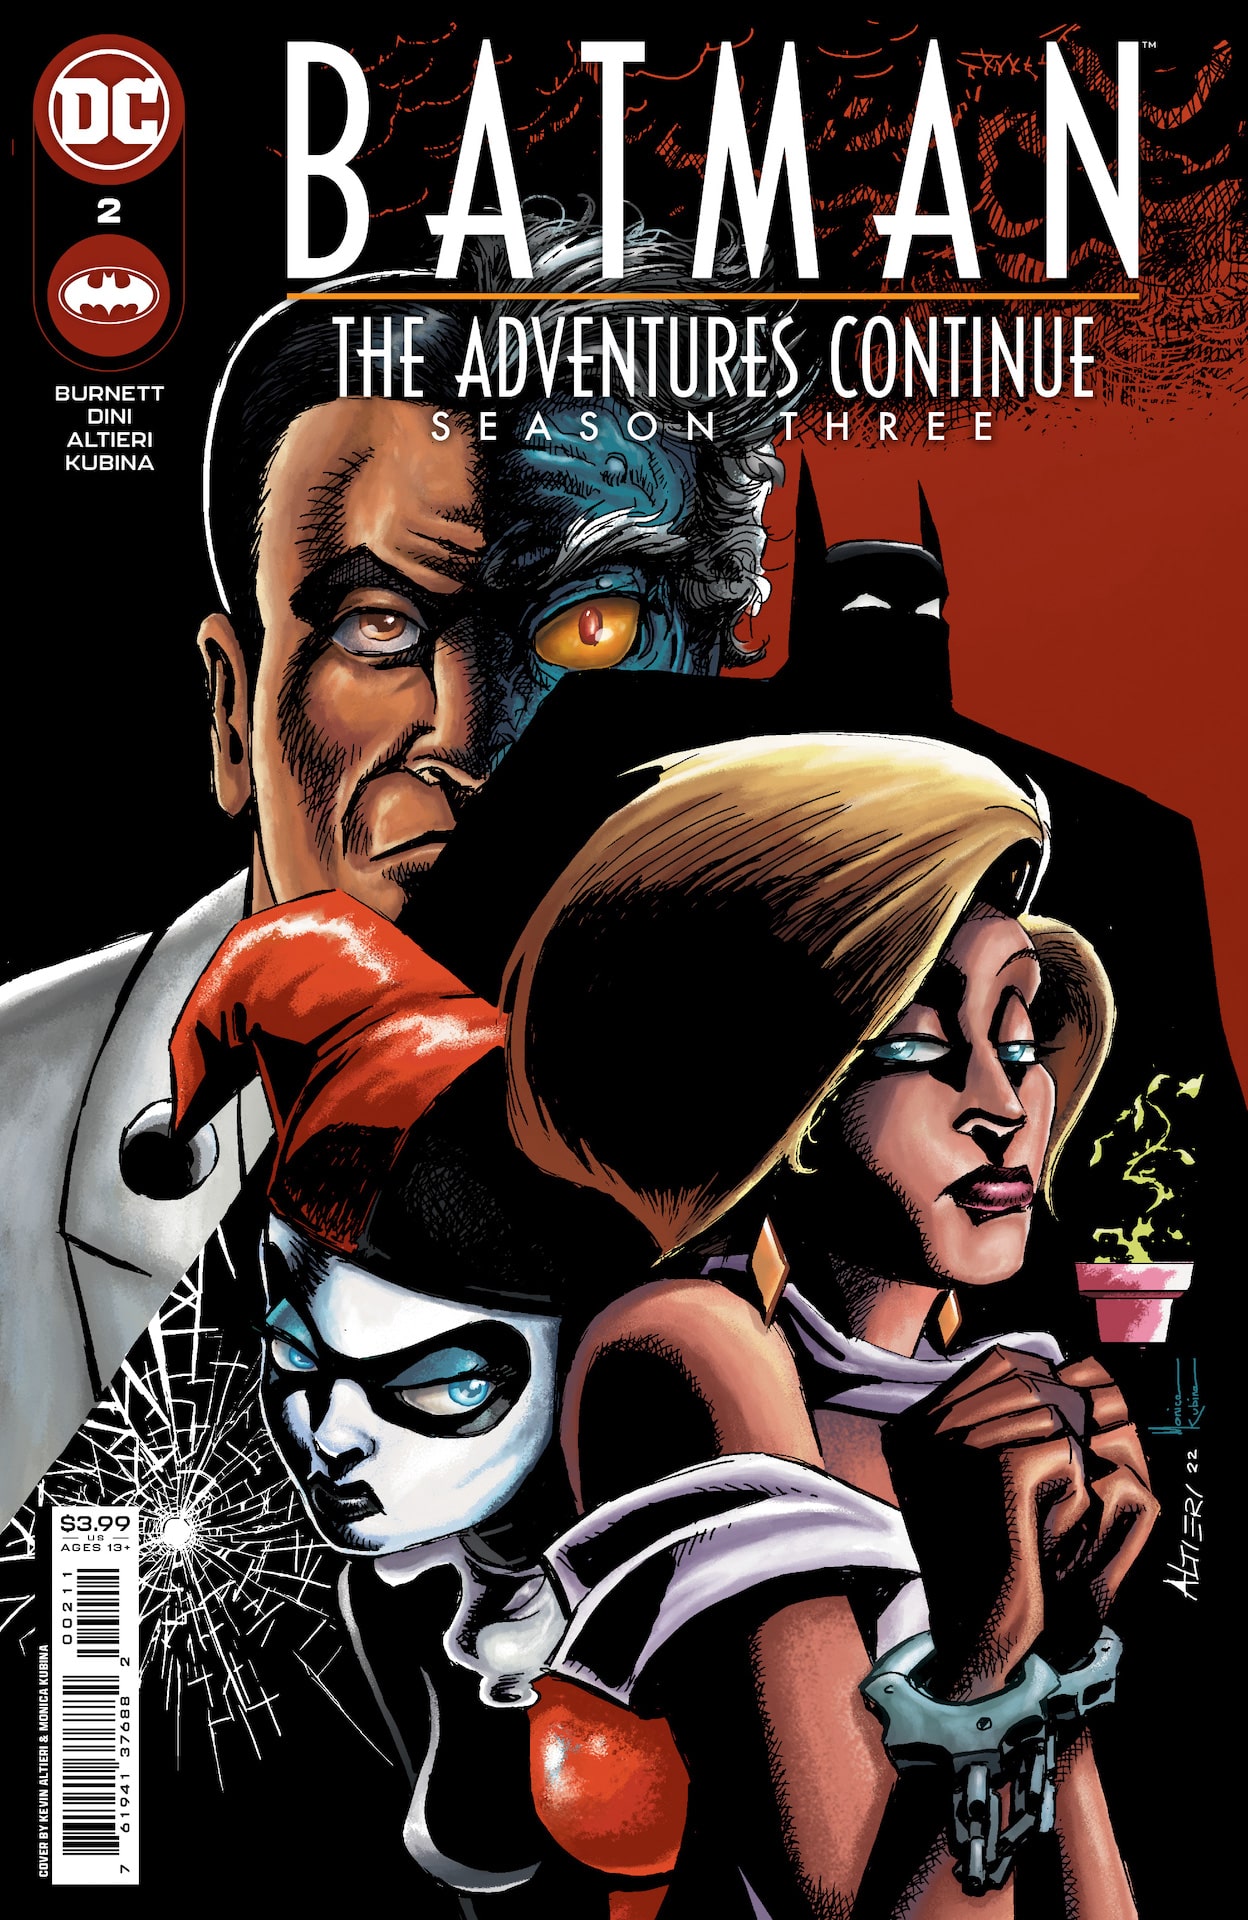 DC Preview: Batman: The Adventures Continue Season Three #2